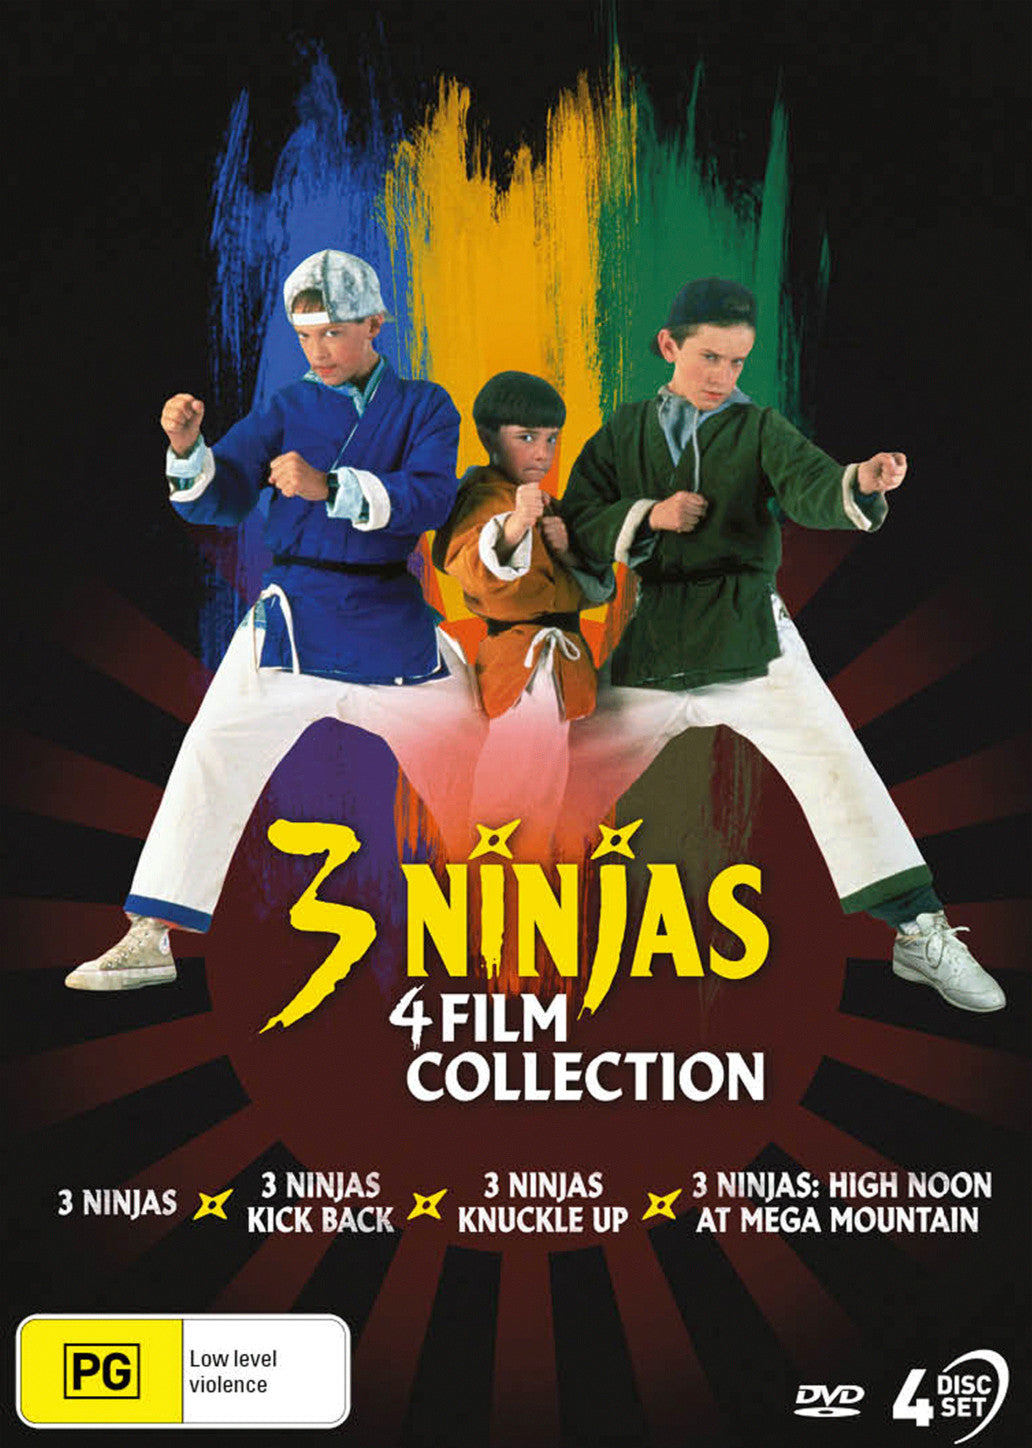 3 NINJAS: 4 FILM COLLECTION (3 NINJAS / 3 NINJAS KICK BACK / 3 NINJAS KNUCKLE UP / 3 NINJAS: HIGH NOON AT MEGA MOUNTAIN) - DVD